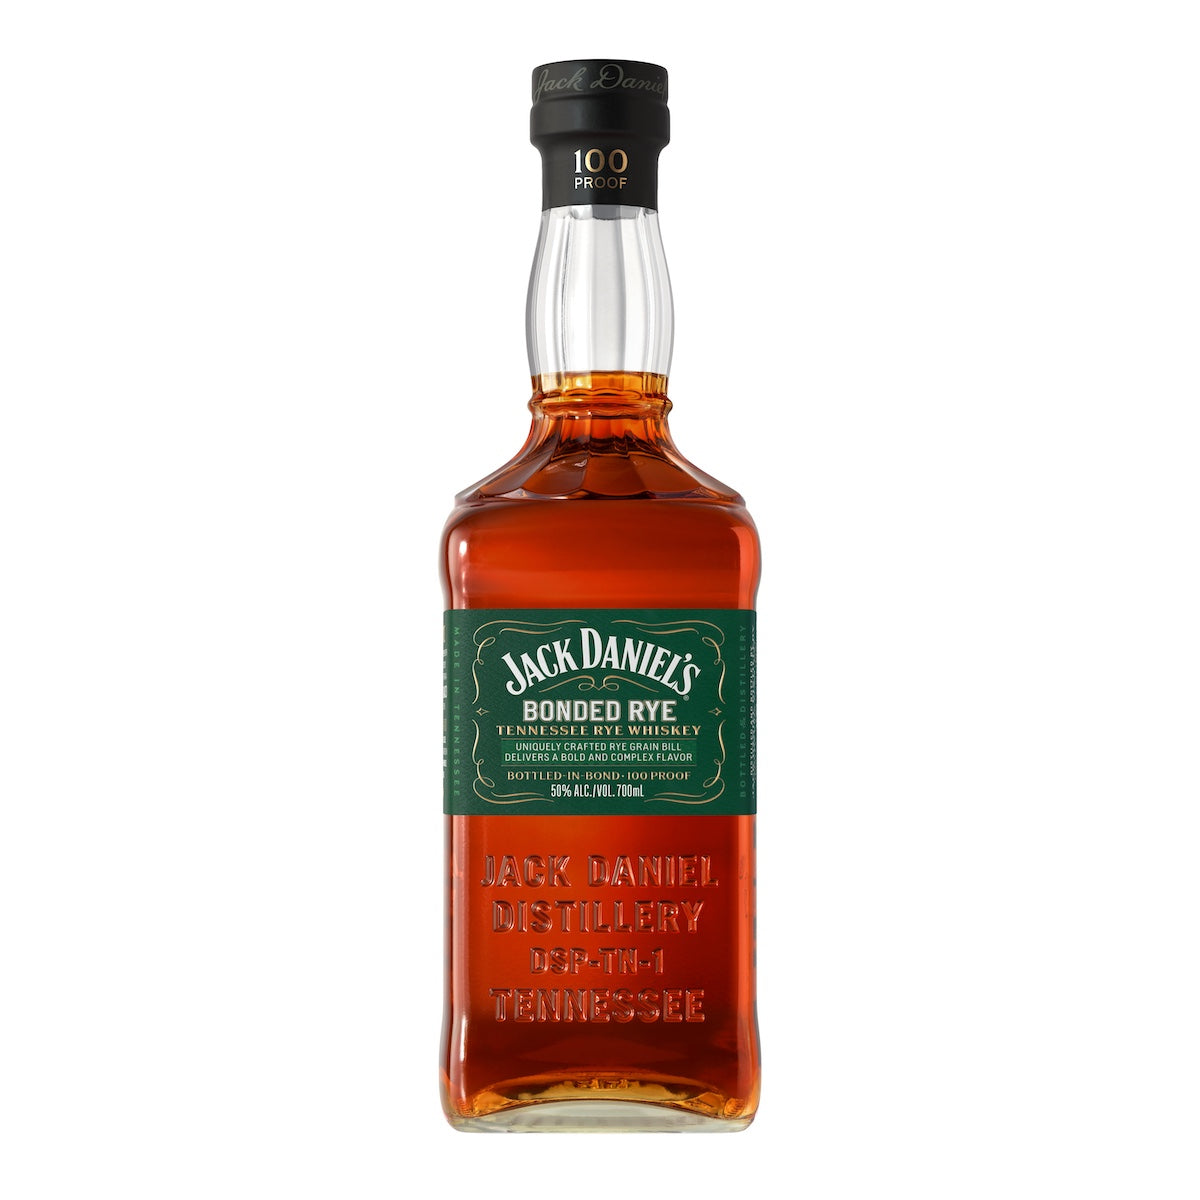 Jack Daniel's Bonded Rye Whiskey 100 Proof